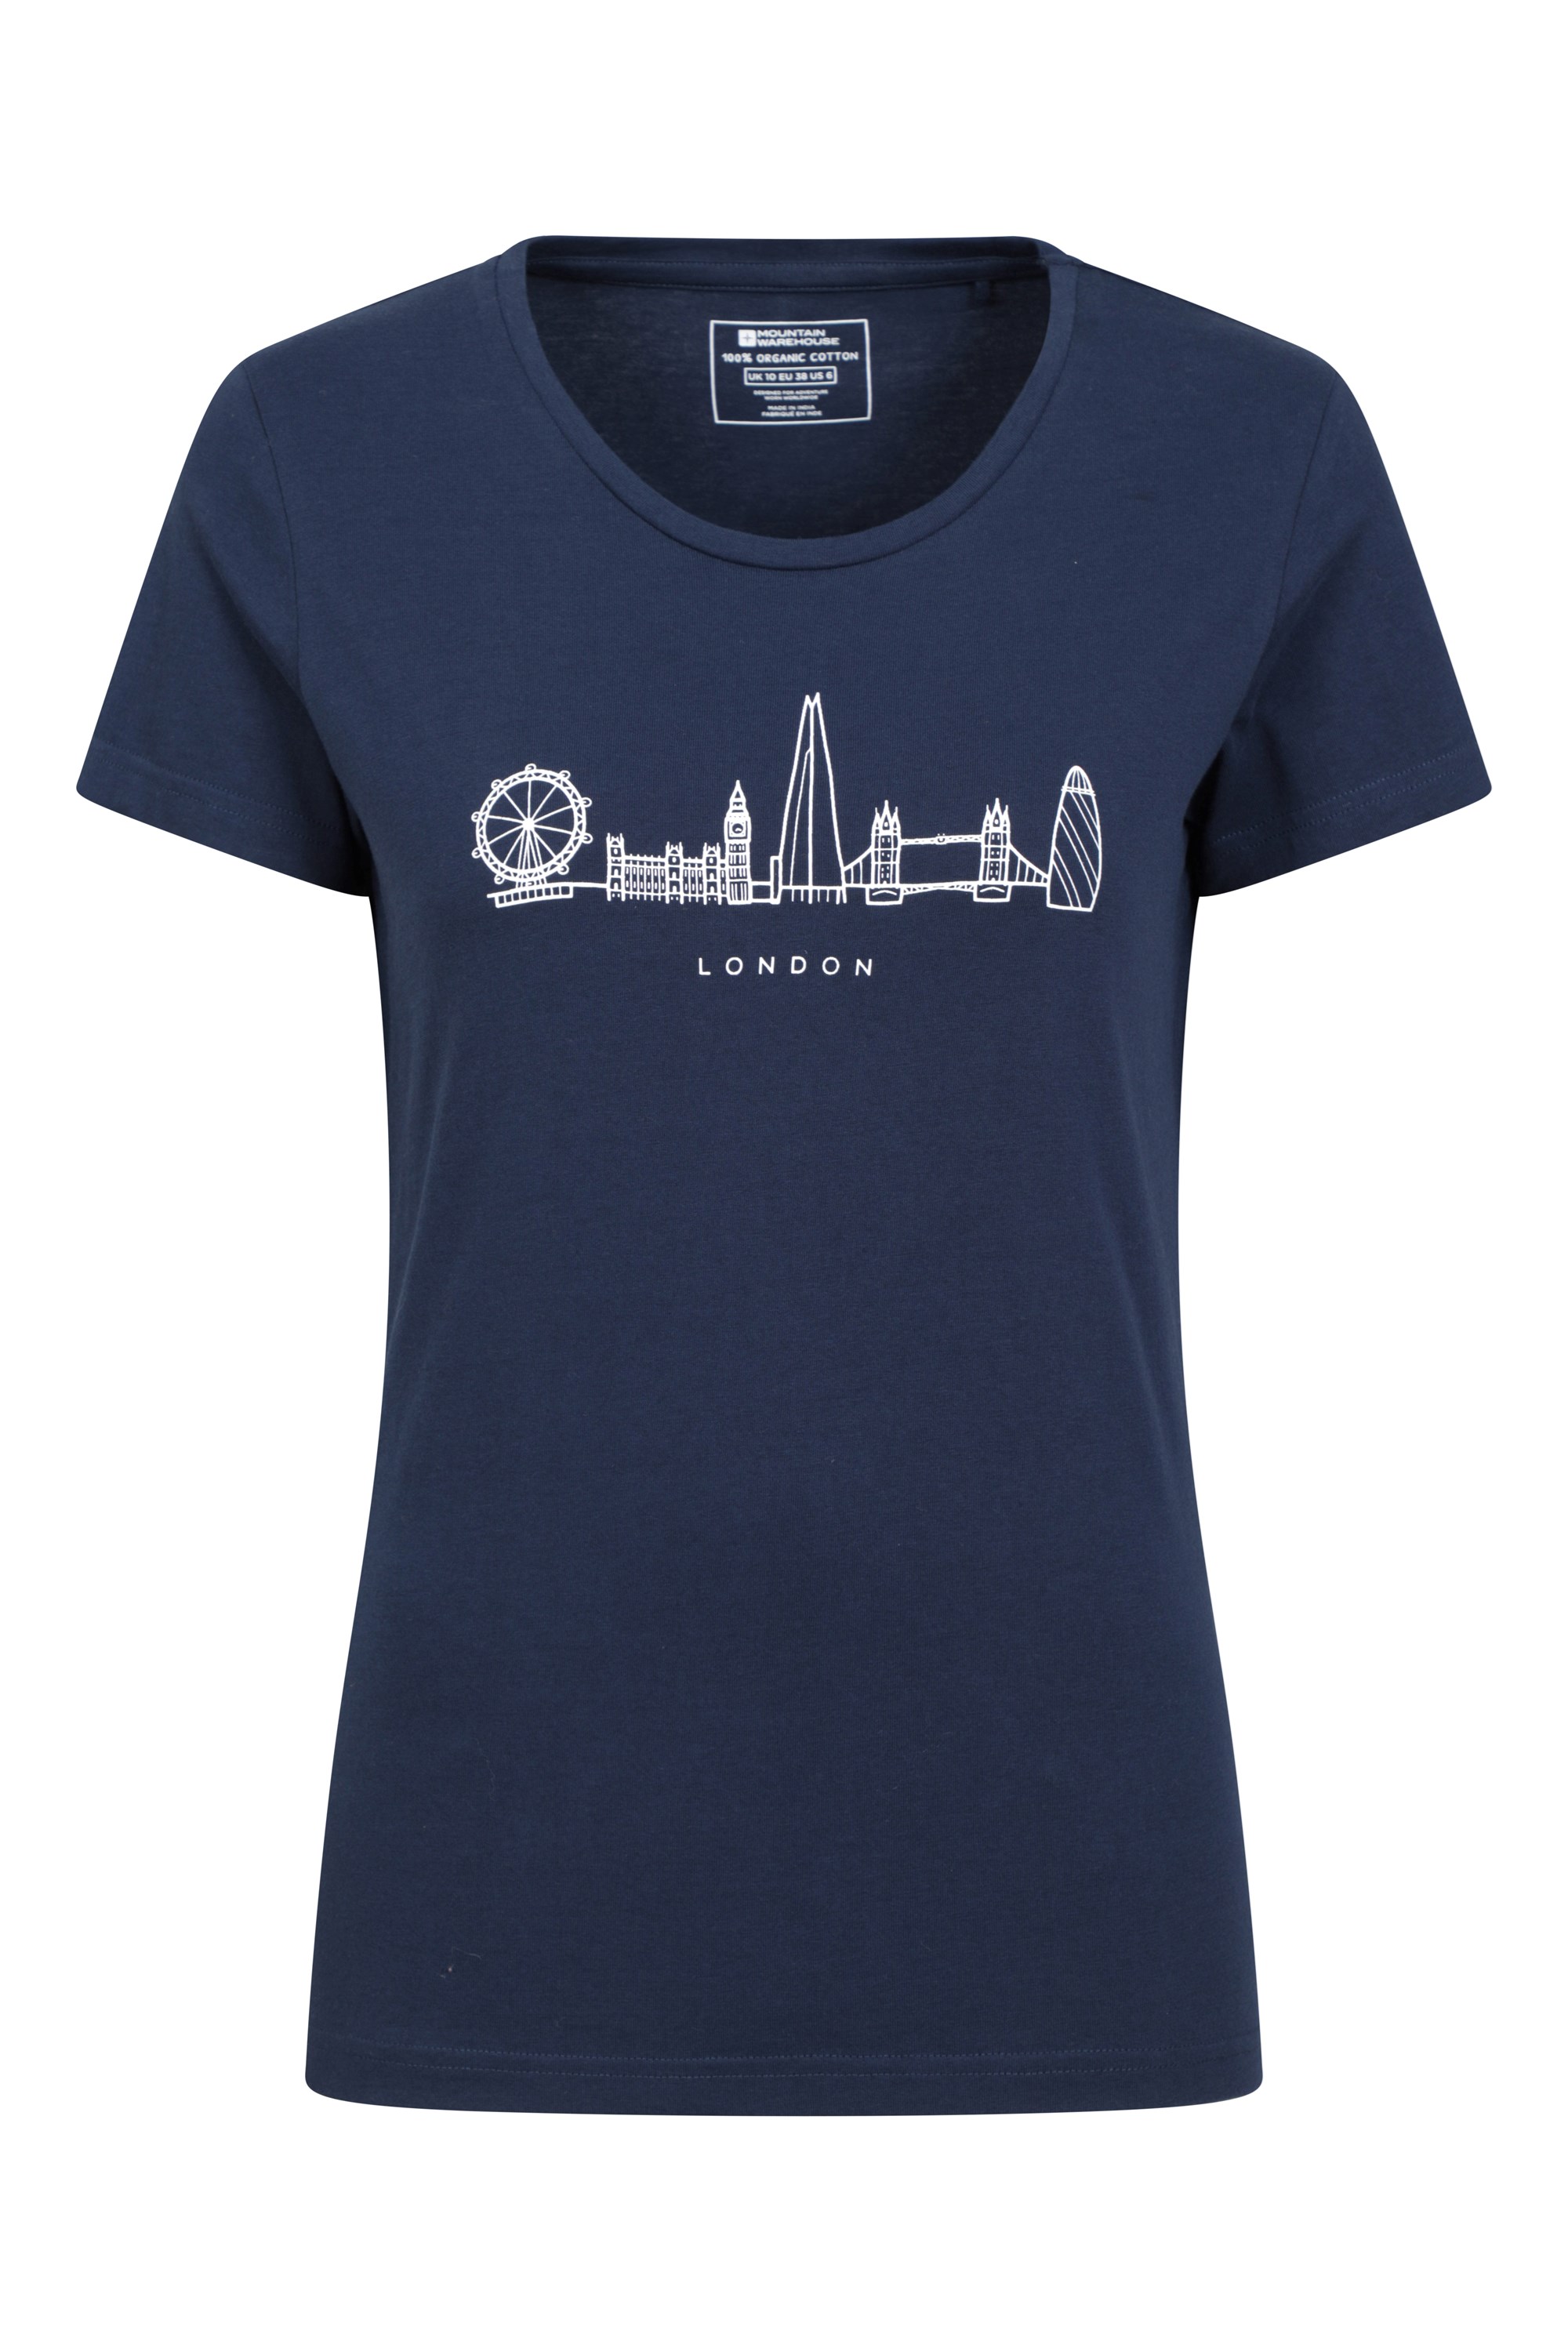 London Womens Printed T-shirt - Navy